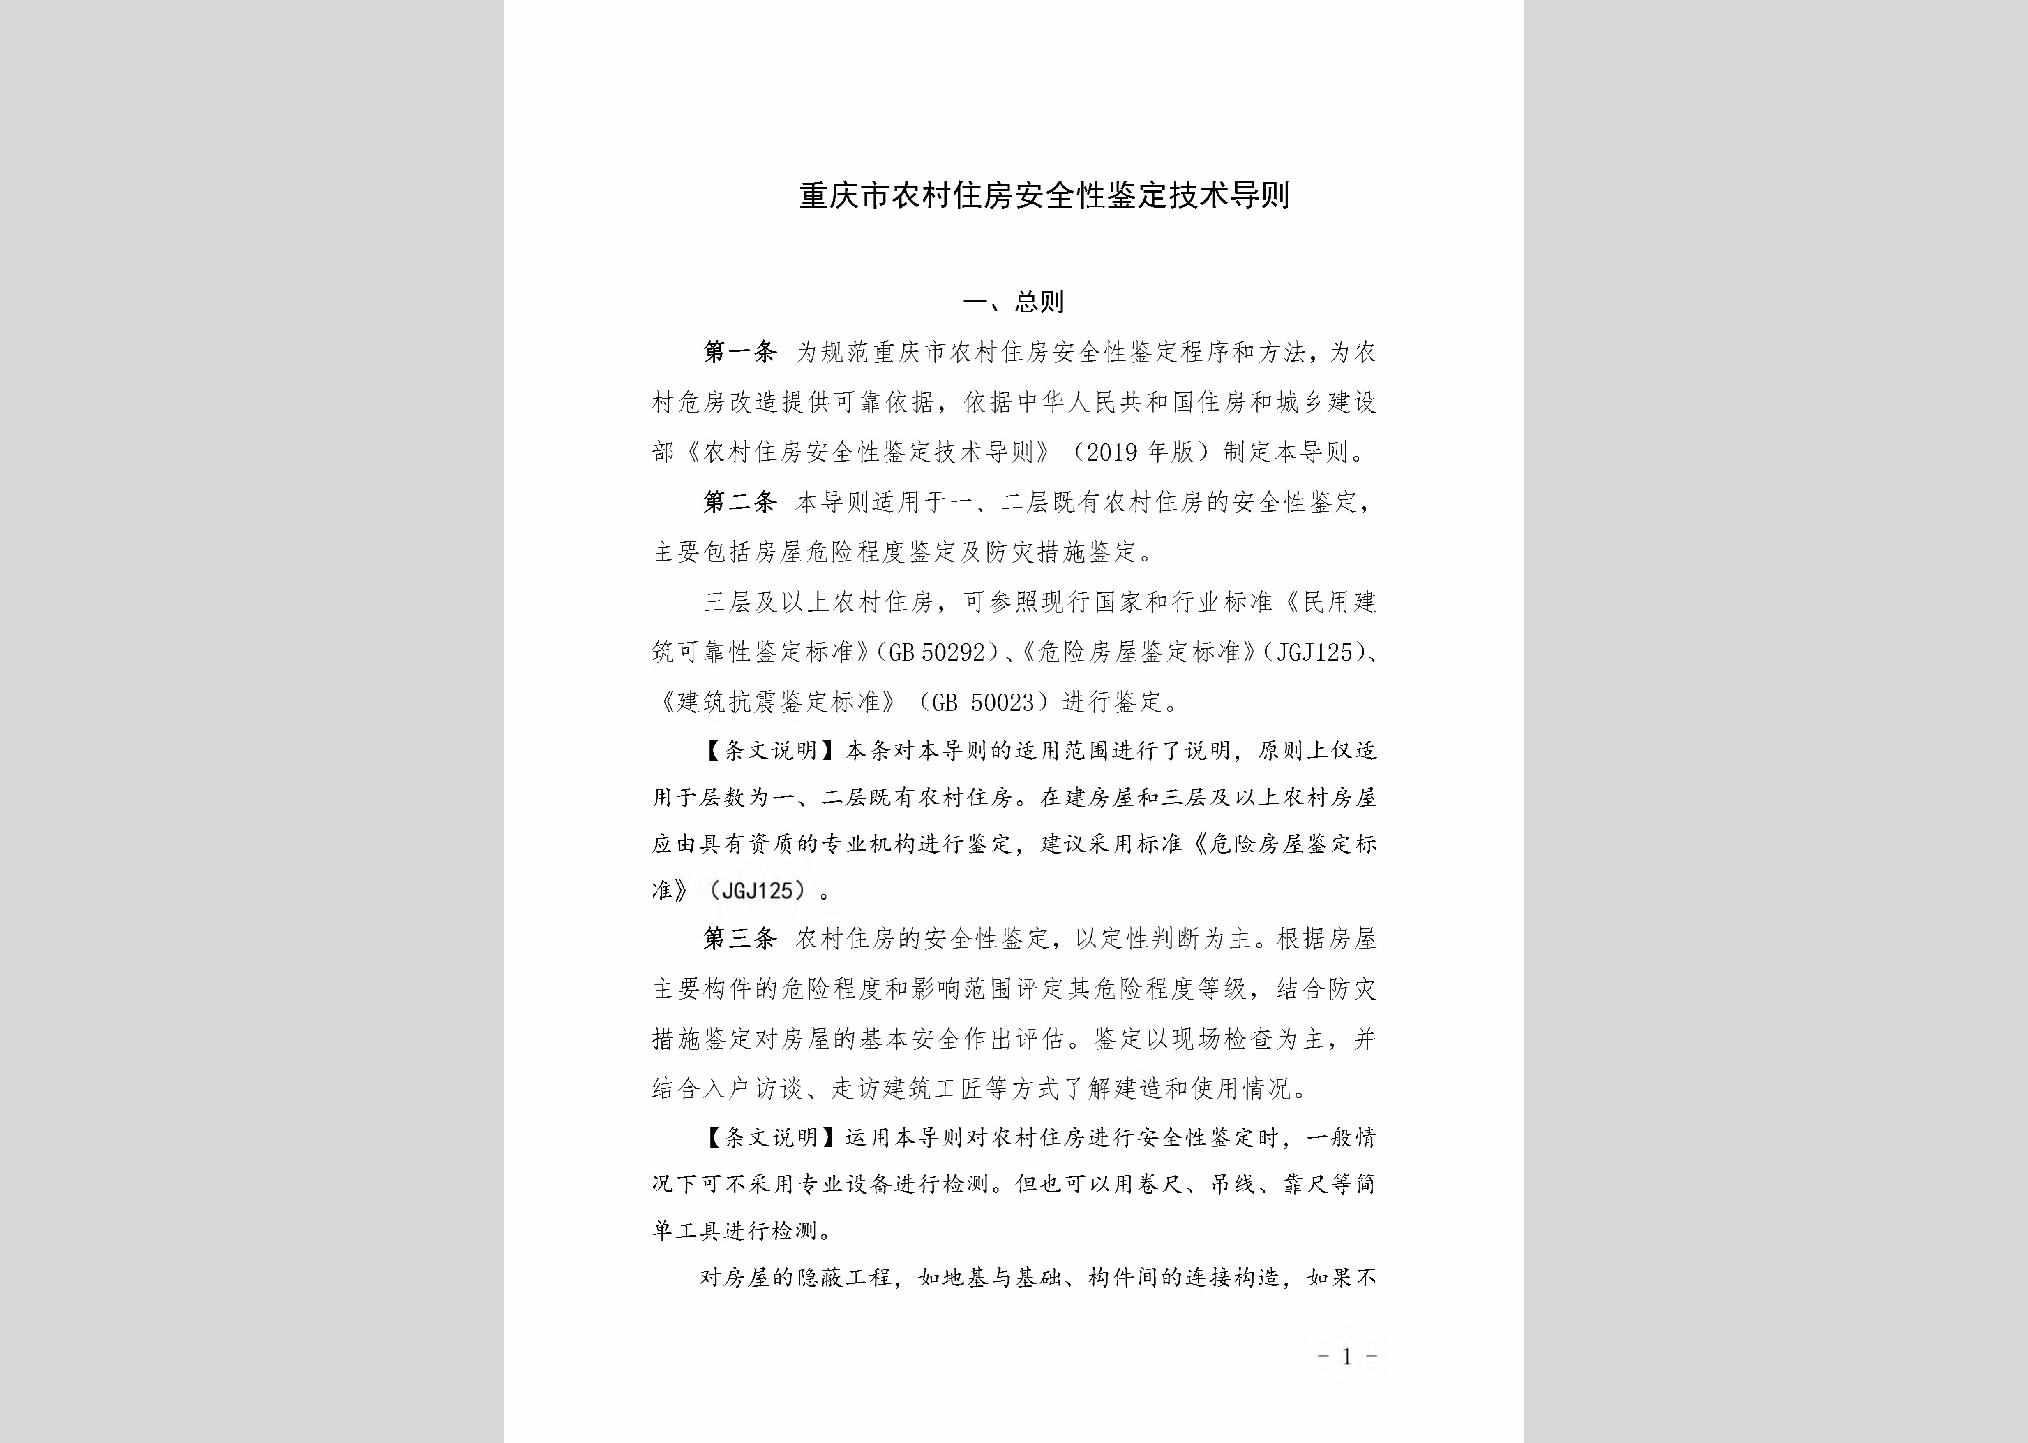 NCZFAQXJ：重庆市农村住房安全性鉴定技术导则